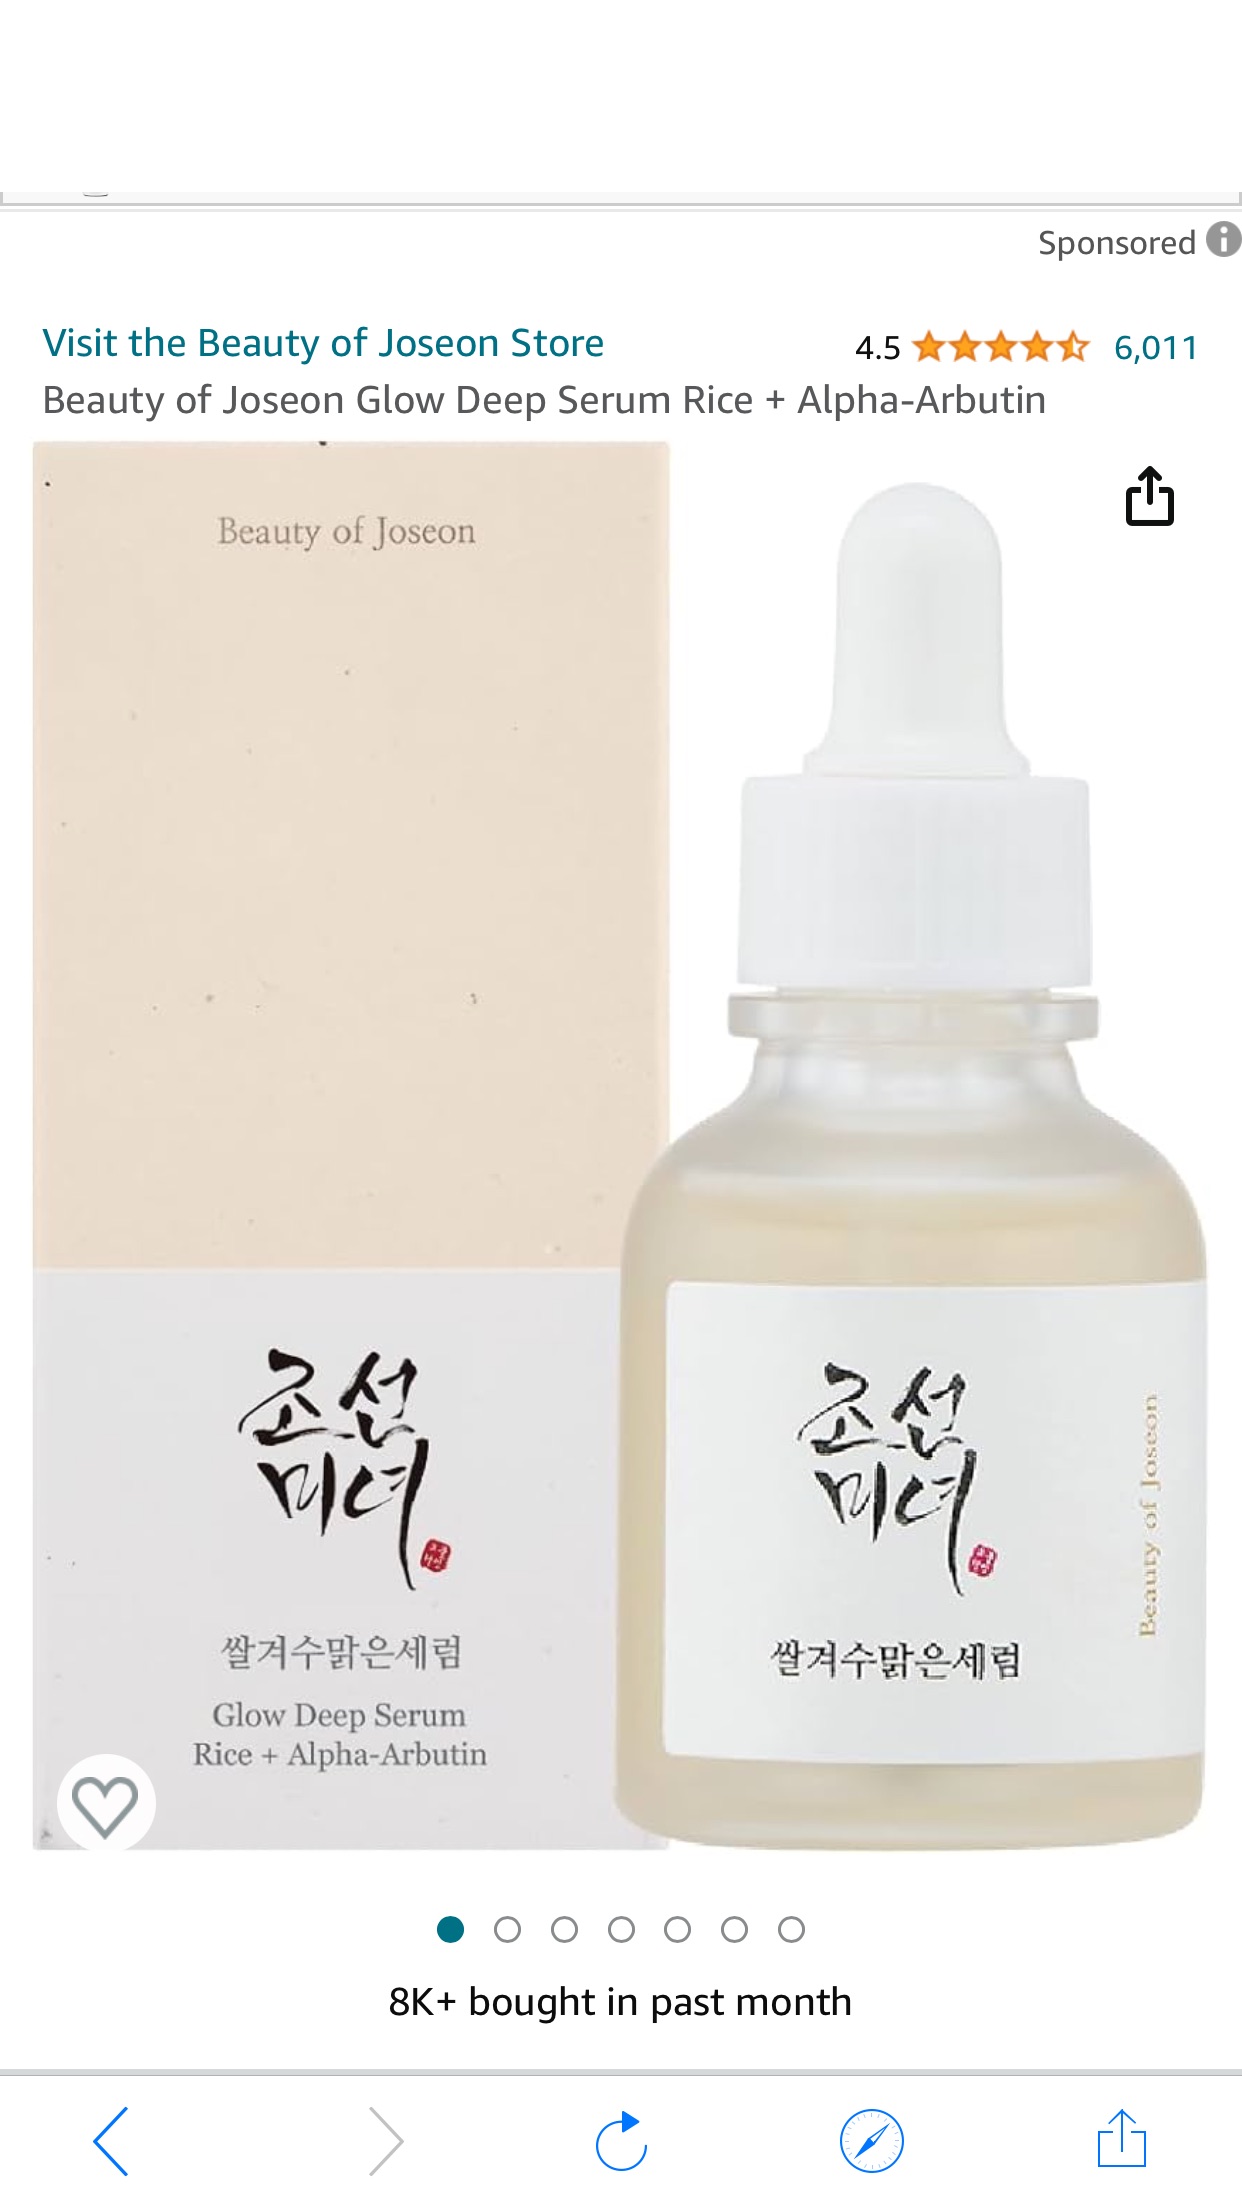 Amazon.com: Beauty of Joseon Glow Deep Serum Rice + Alpha-Arbutin : Beauty & Personal Care